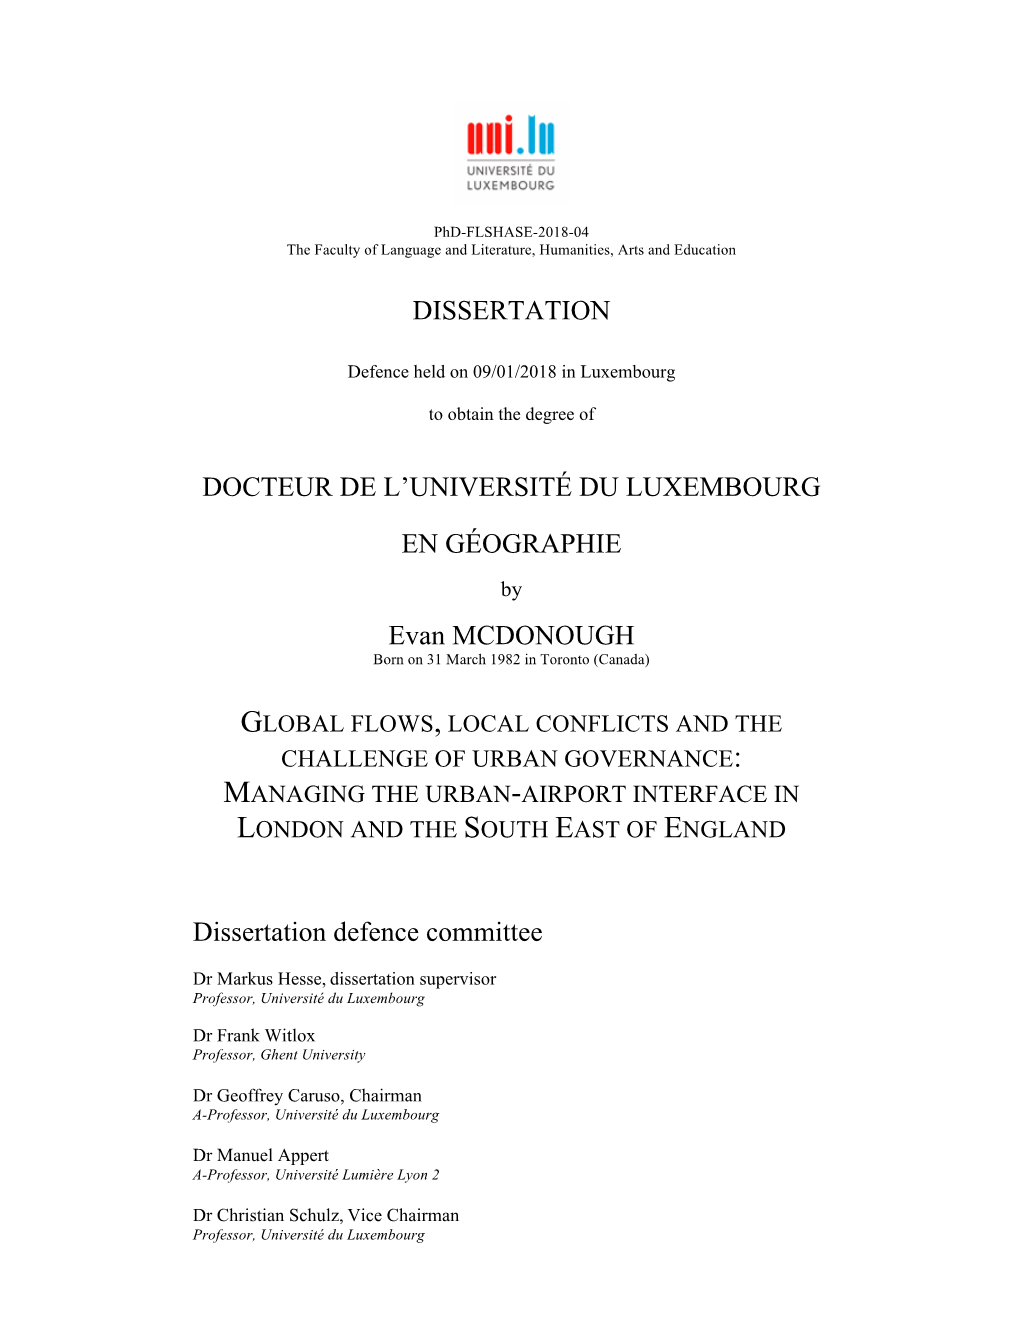 Evan Mcdonough Dissertation Geography Uni Luxembourg.Pdf